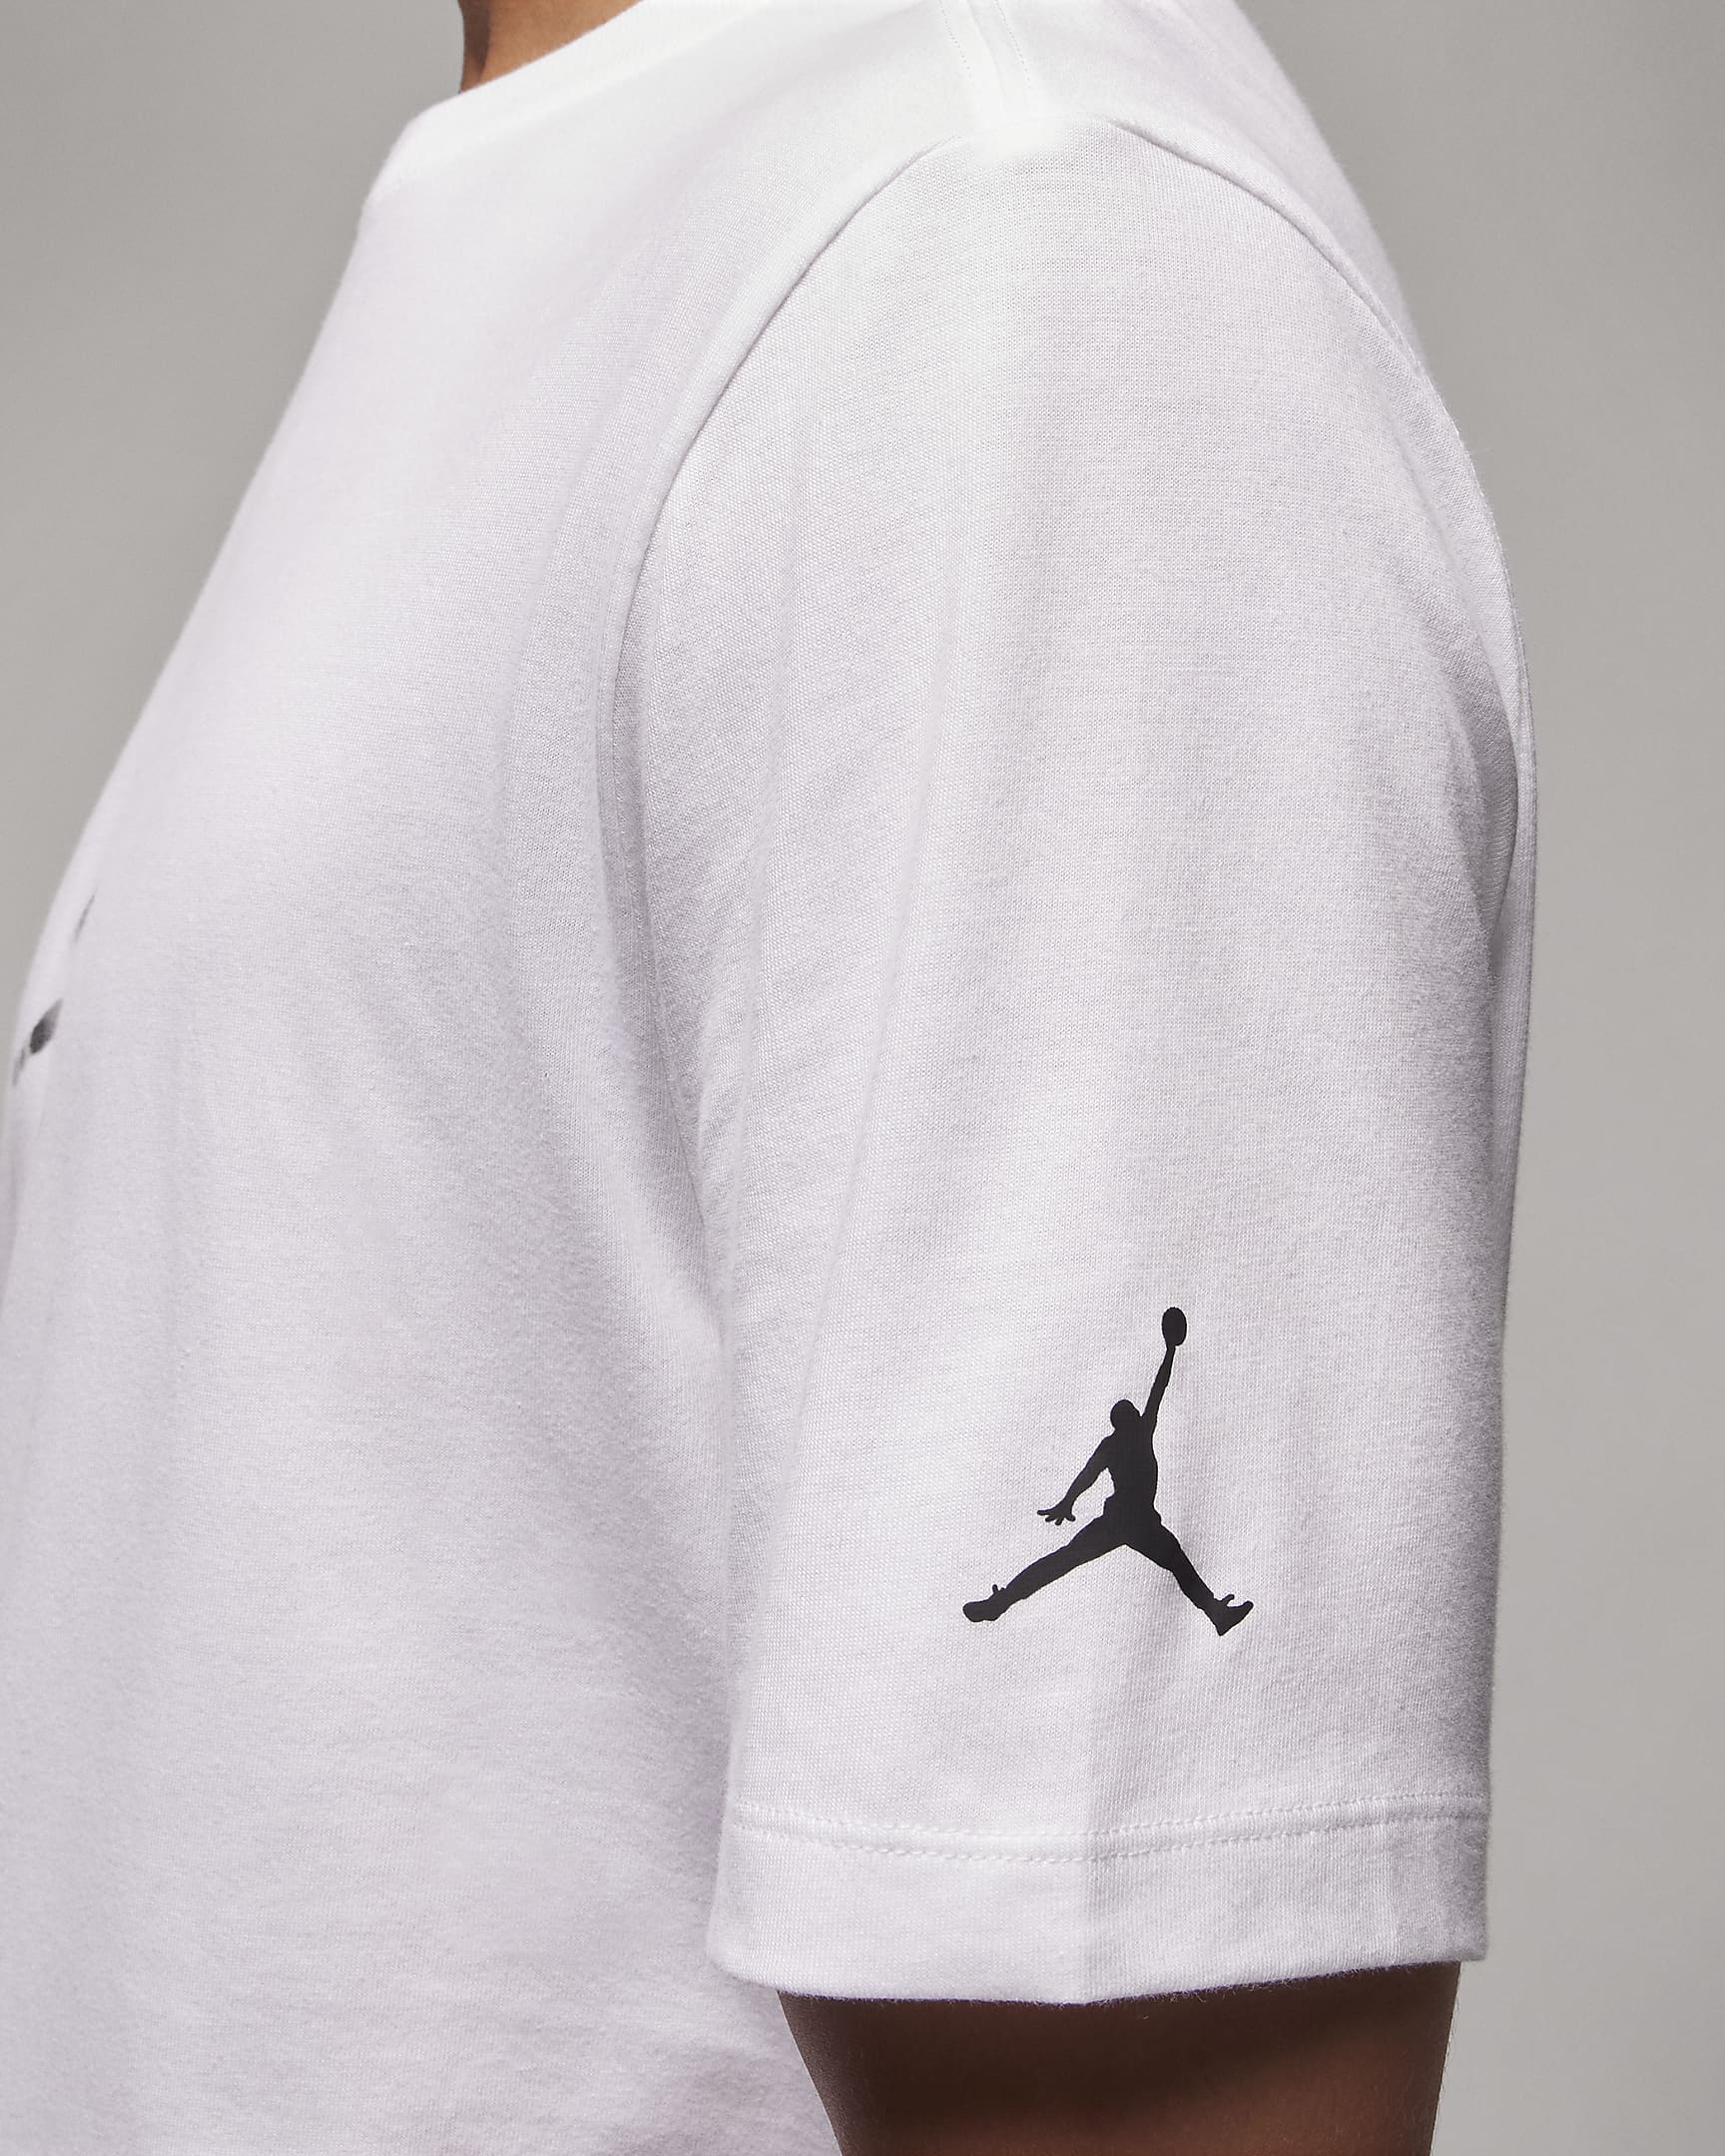 Jordan Brand Men's Graphic T-Shirt. Nike UK